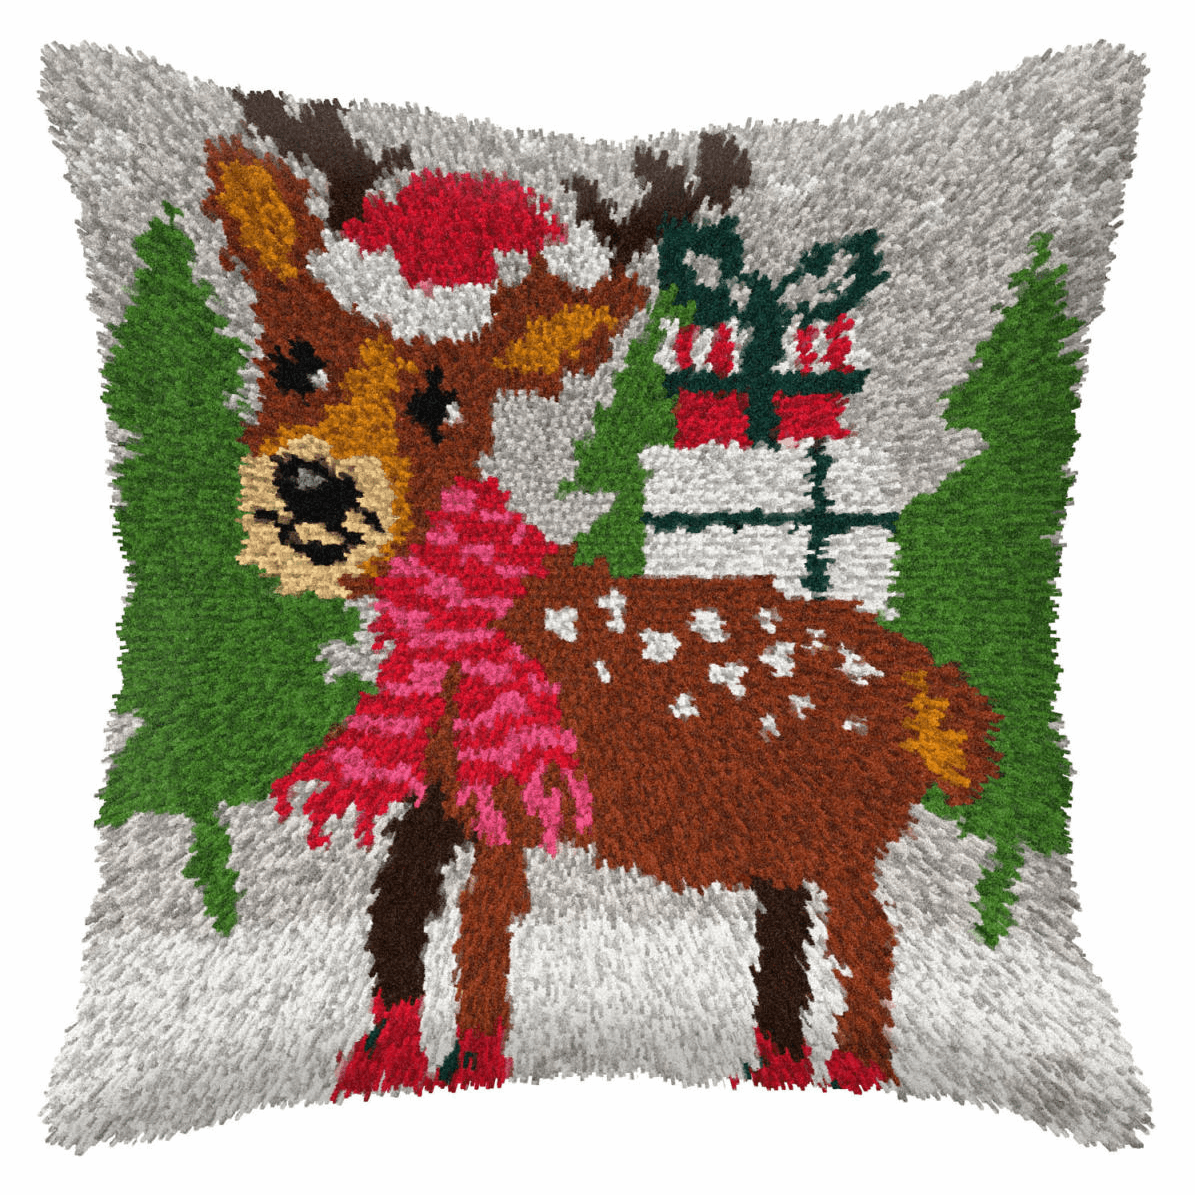 Latch Hook Cushion Kit - Large Reindeer